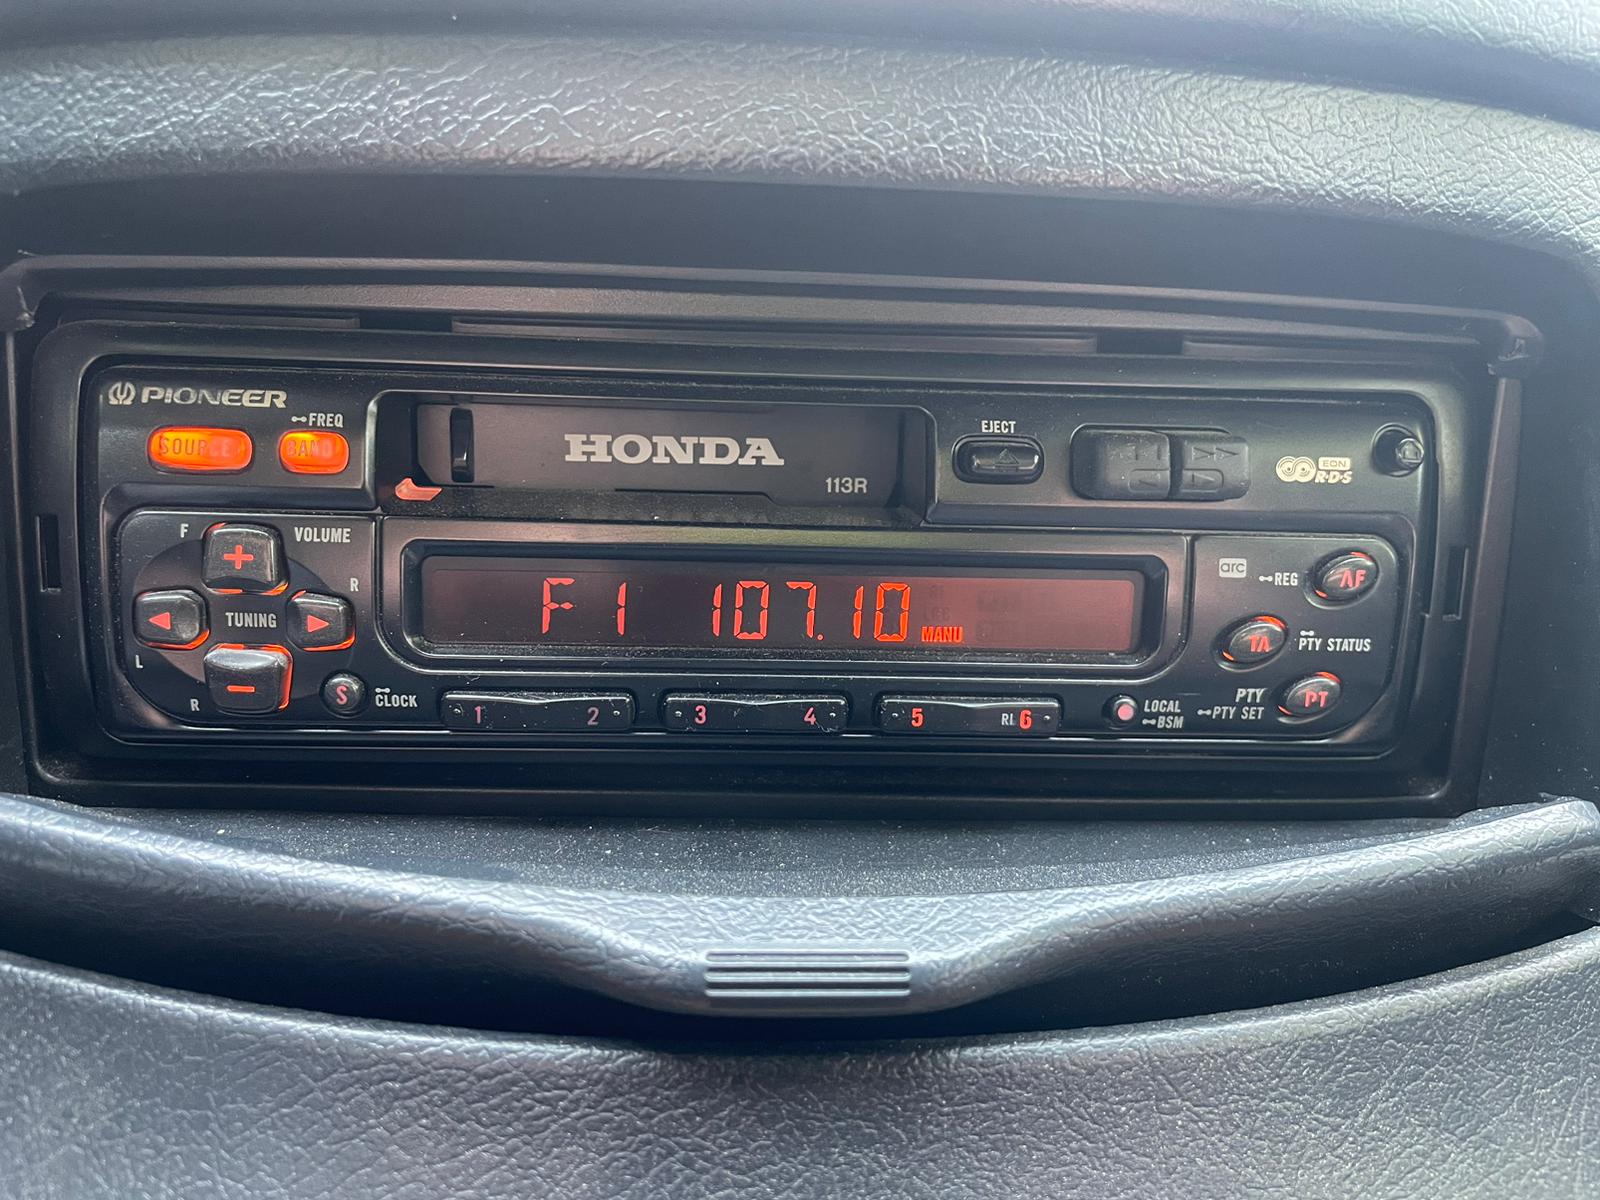 Honda CRX radio.jpeg